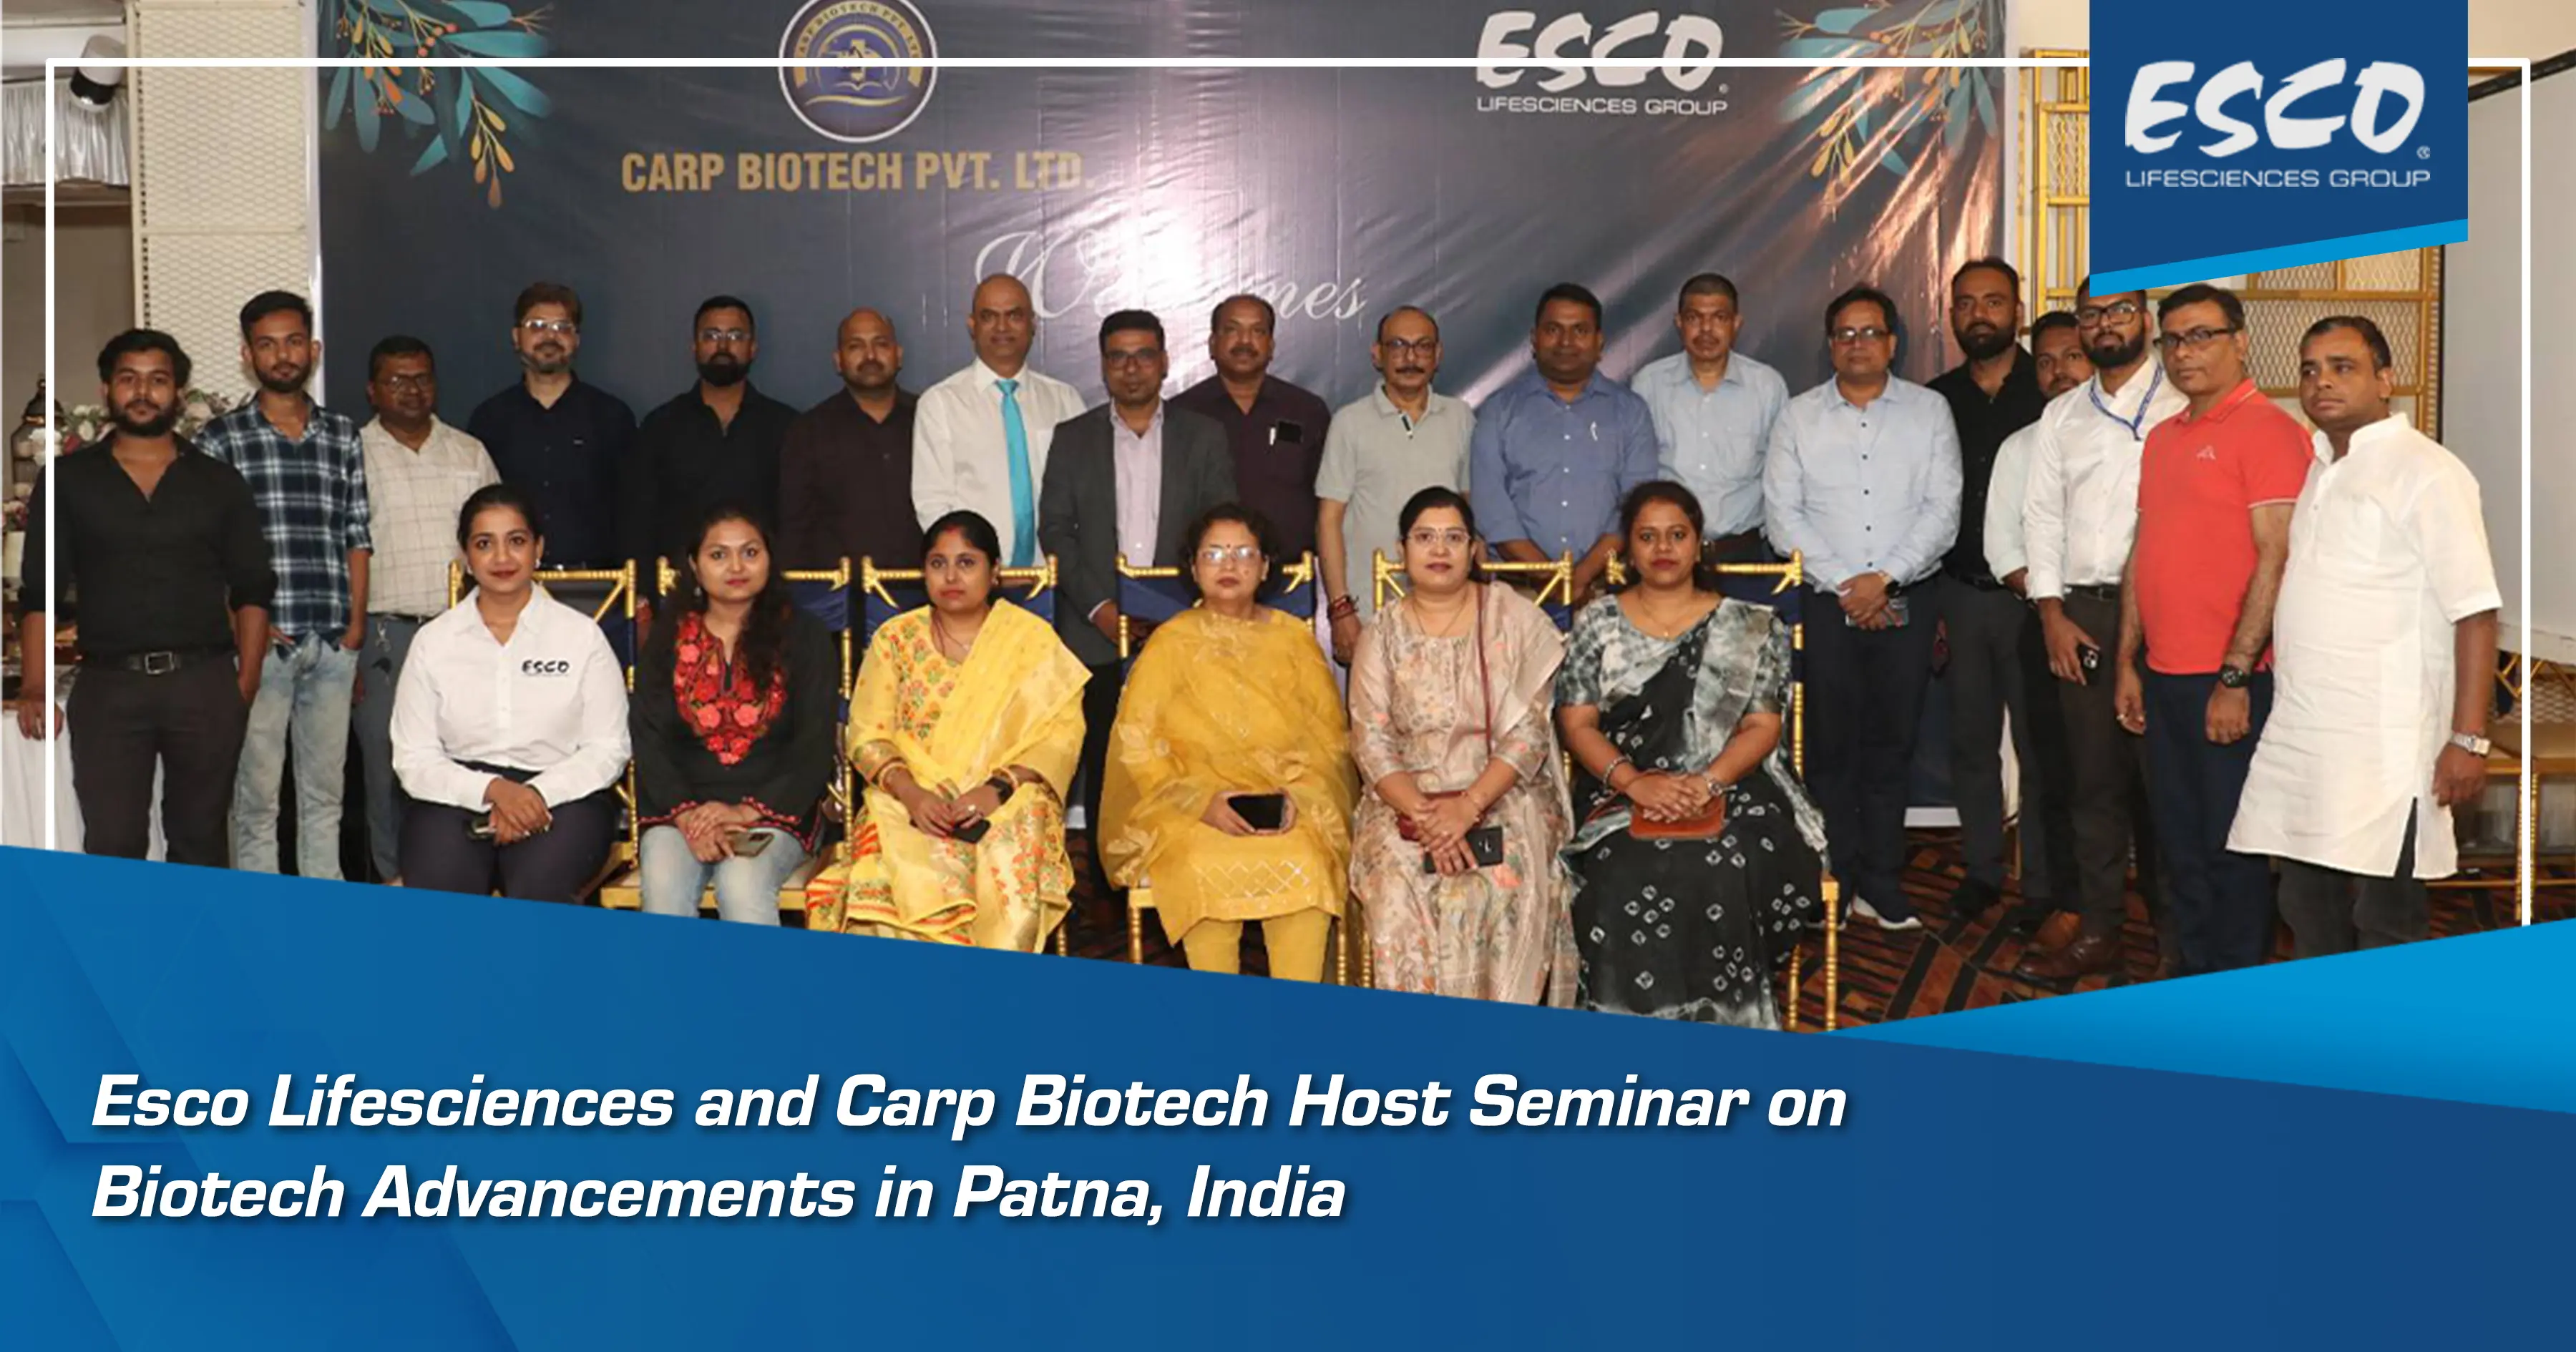 Esco Lifesciences and Carp Biotech Host Seminar on Biotech Advancements in Patna